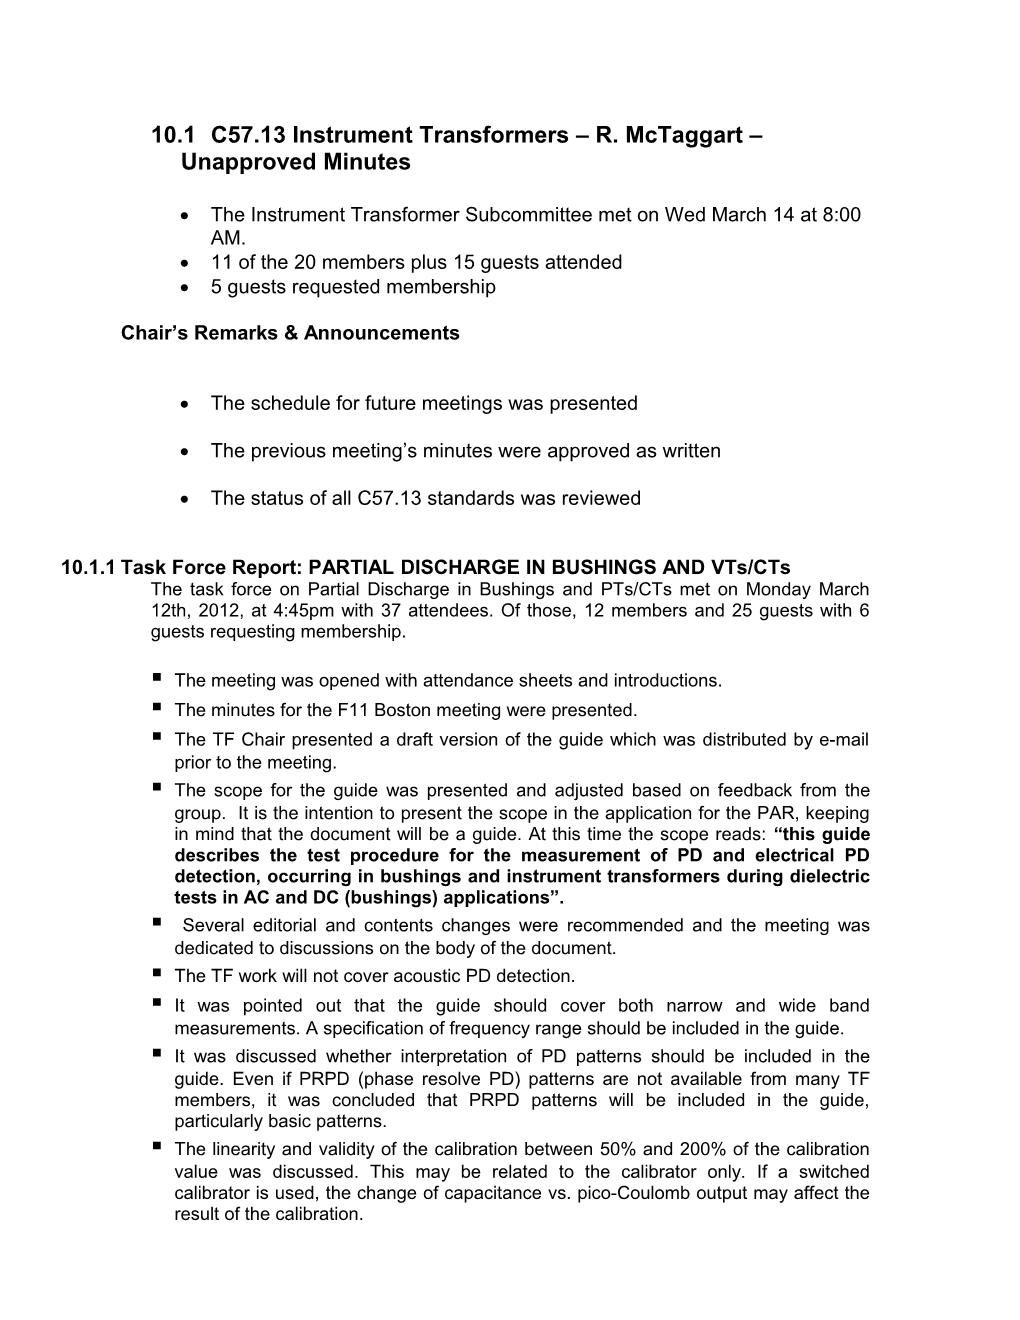 Instrument Transformer Subcommittee Report